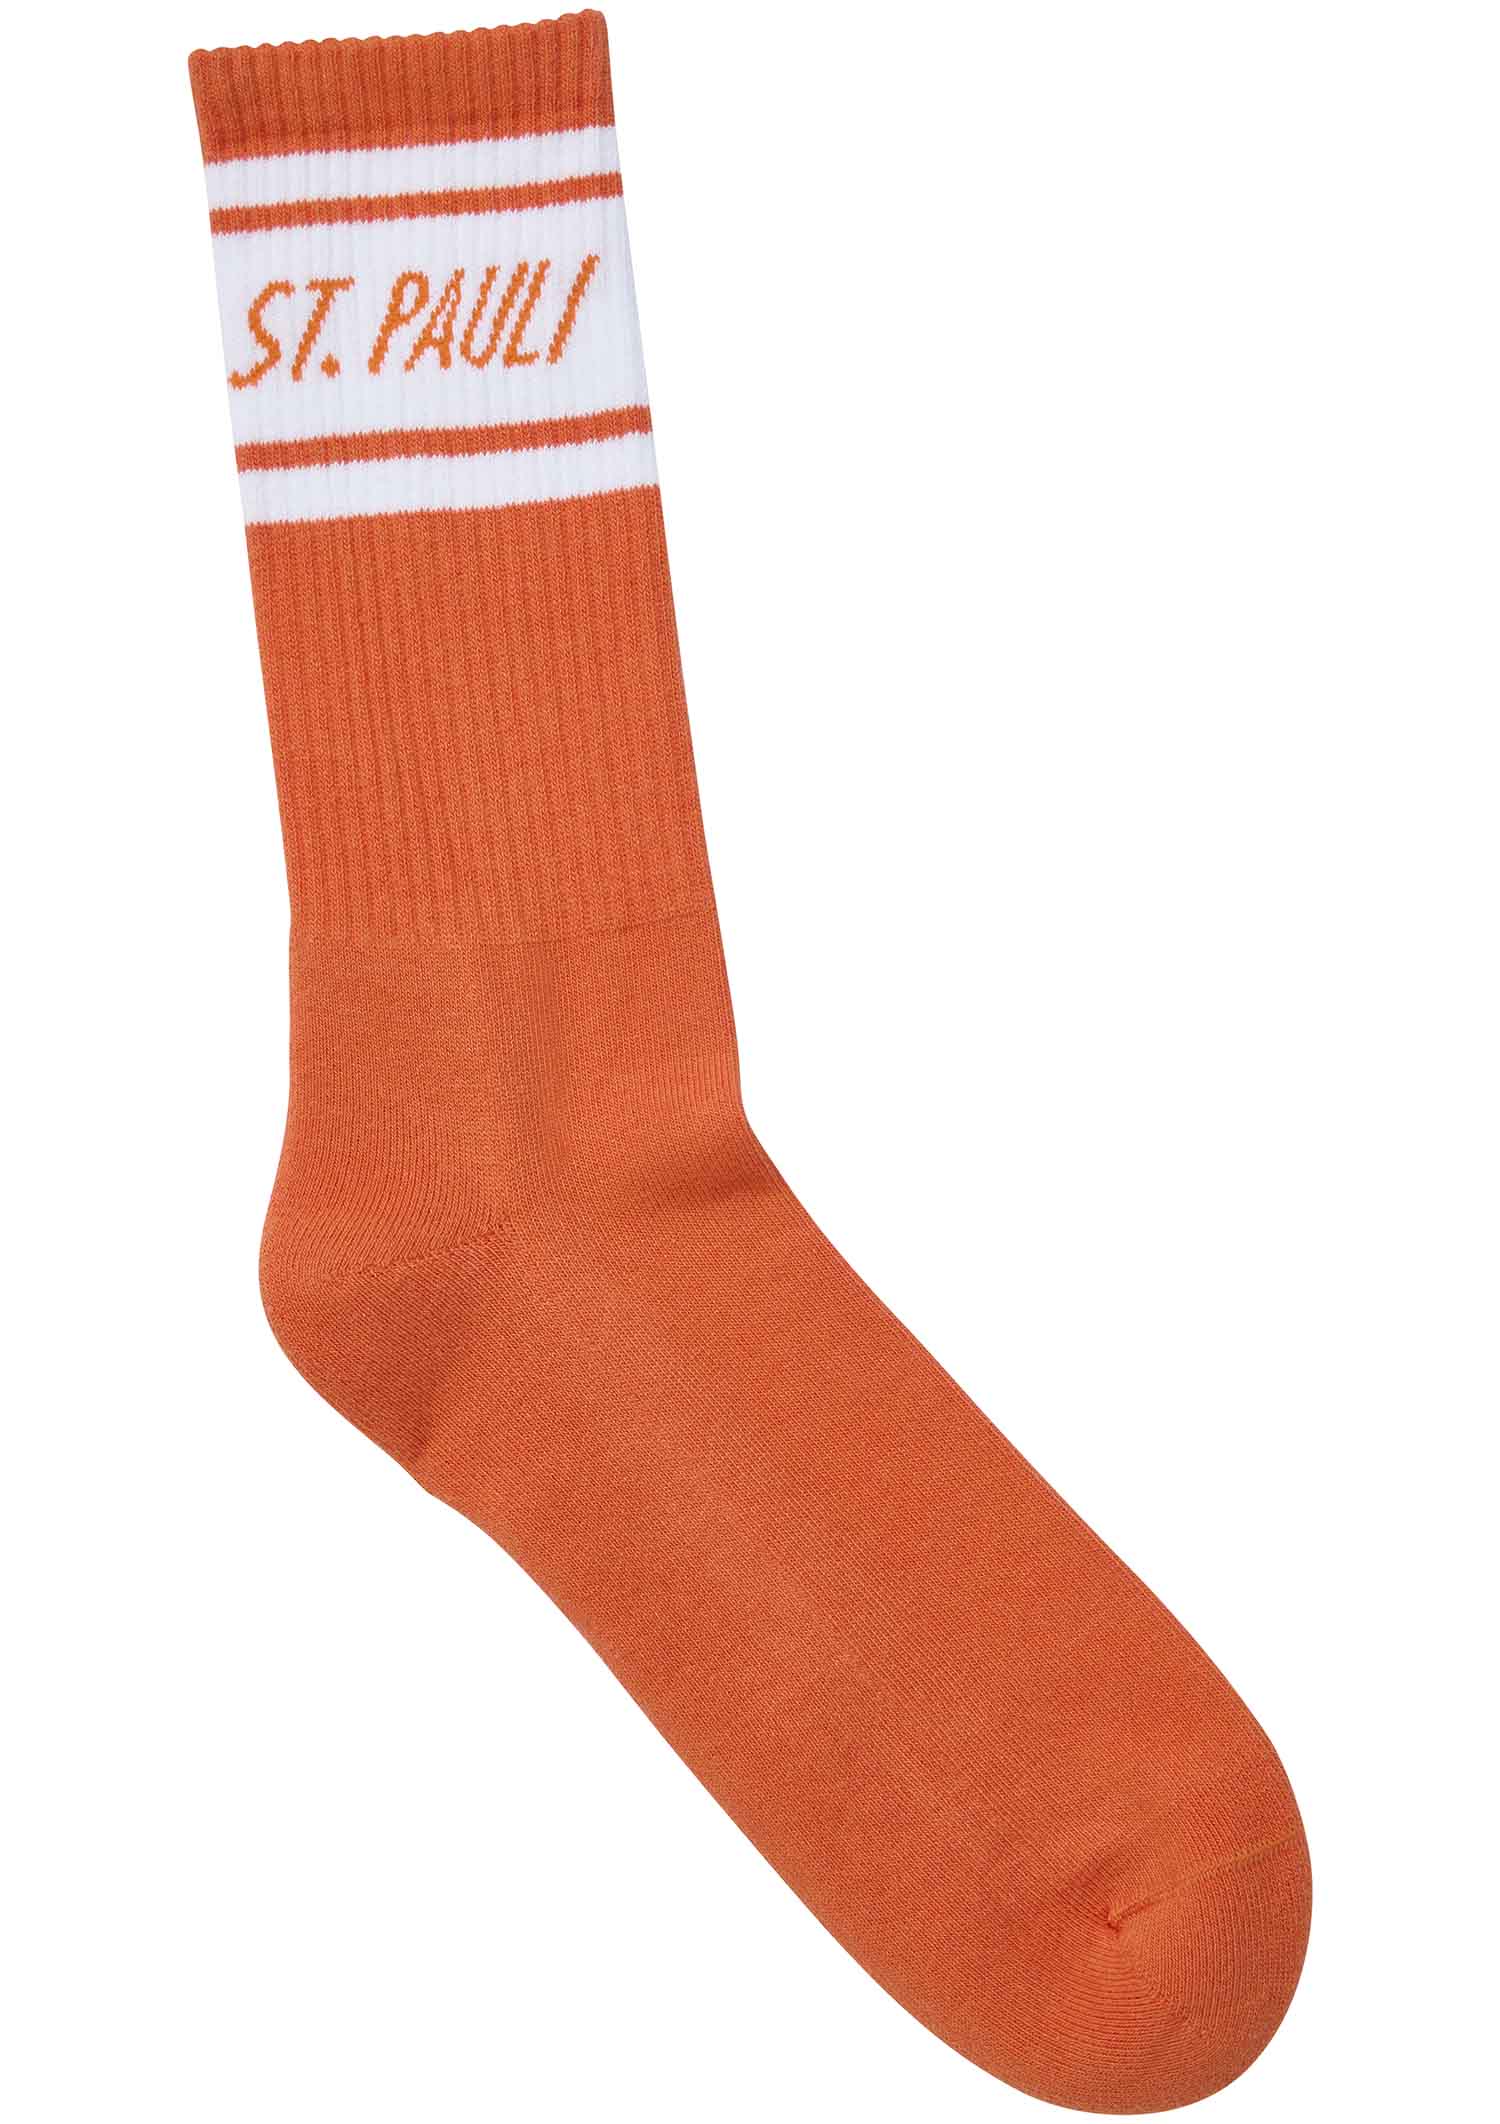 Socken "St. Pauli" - orange